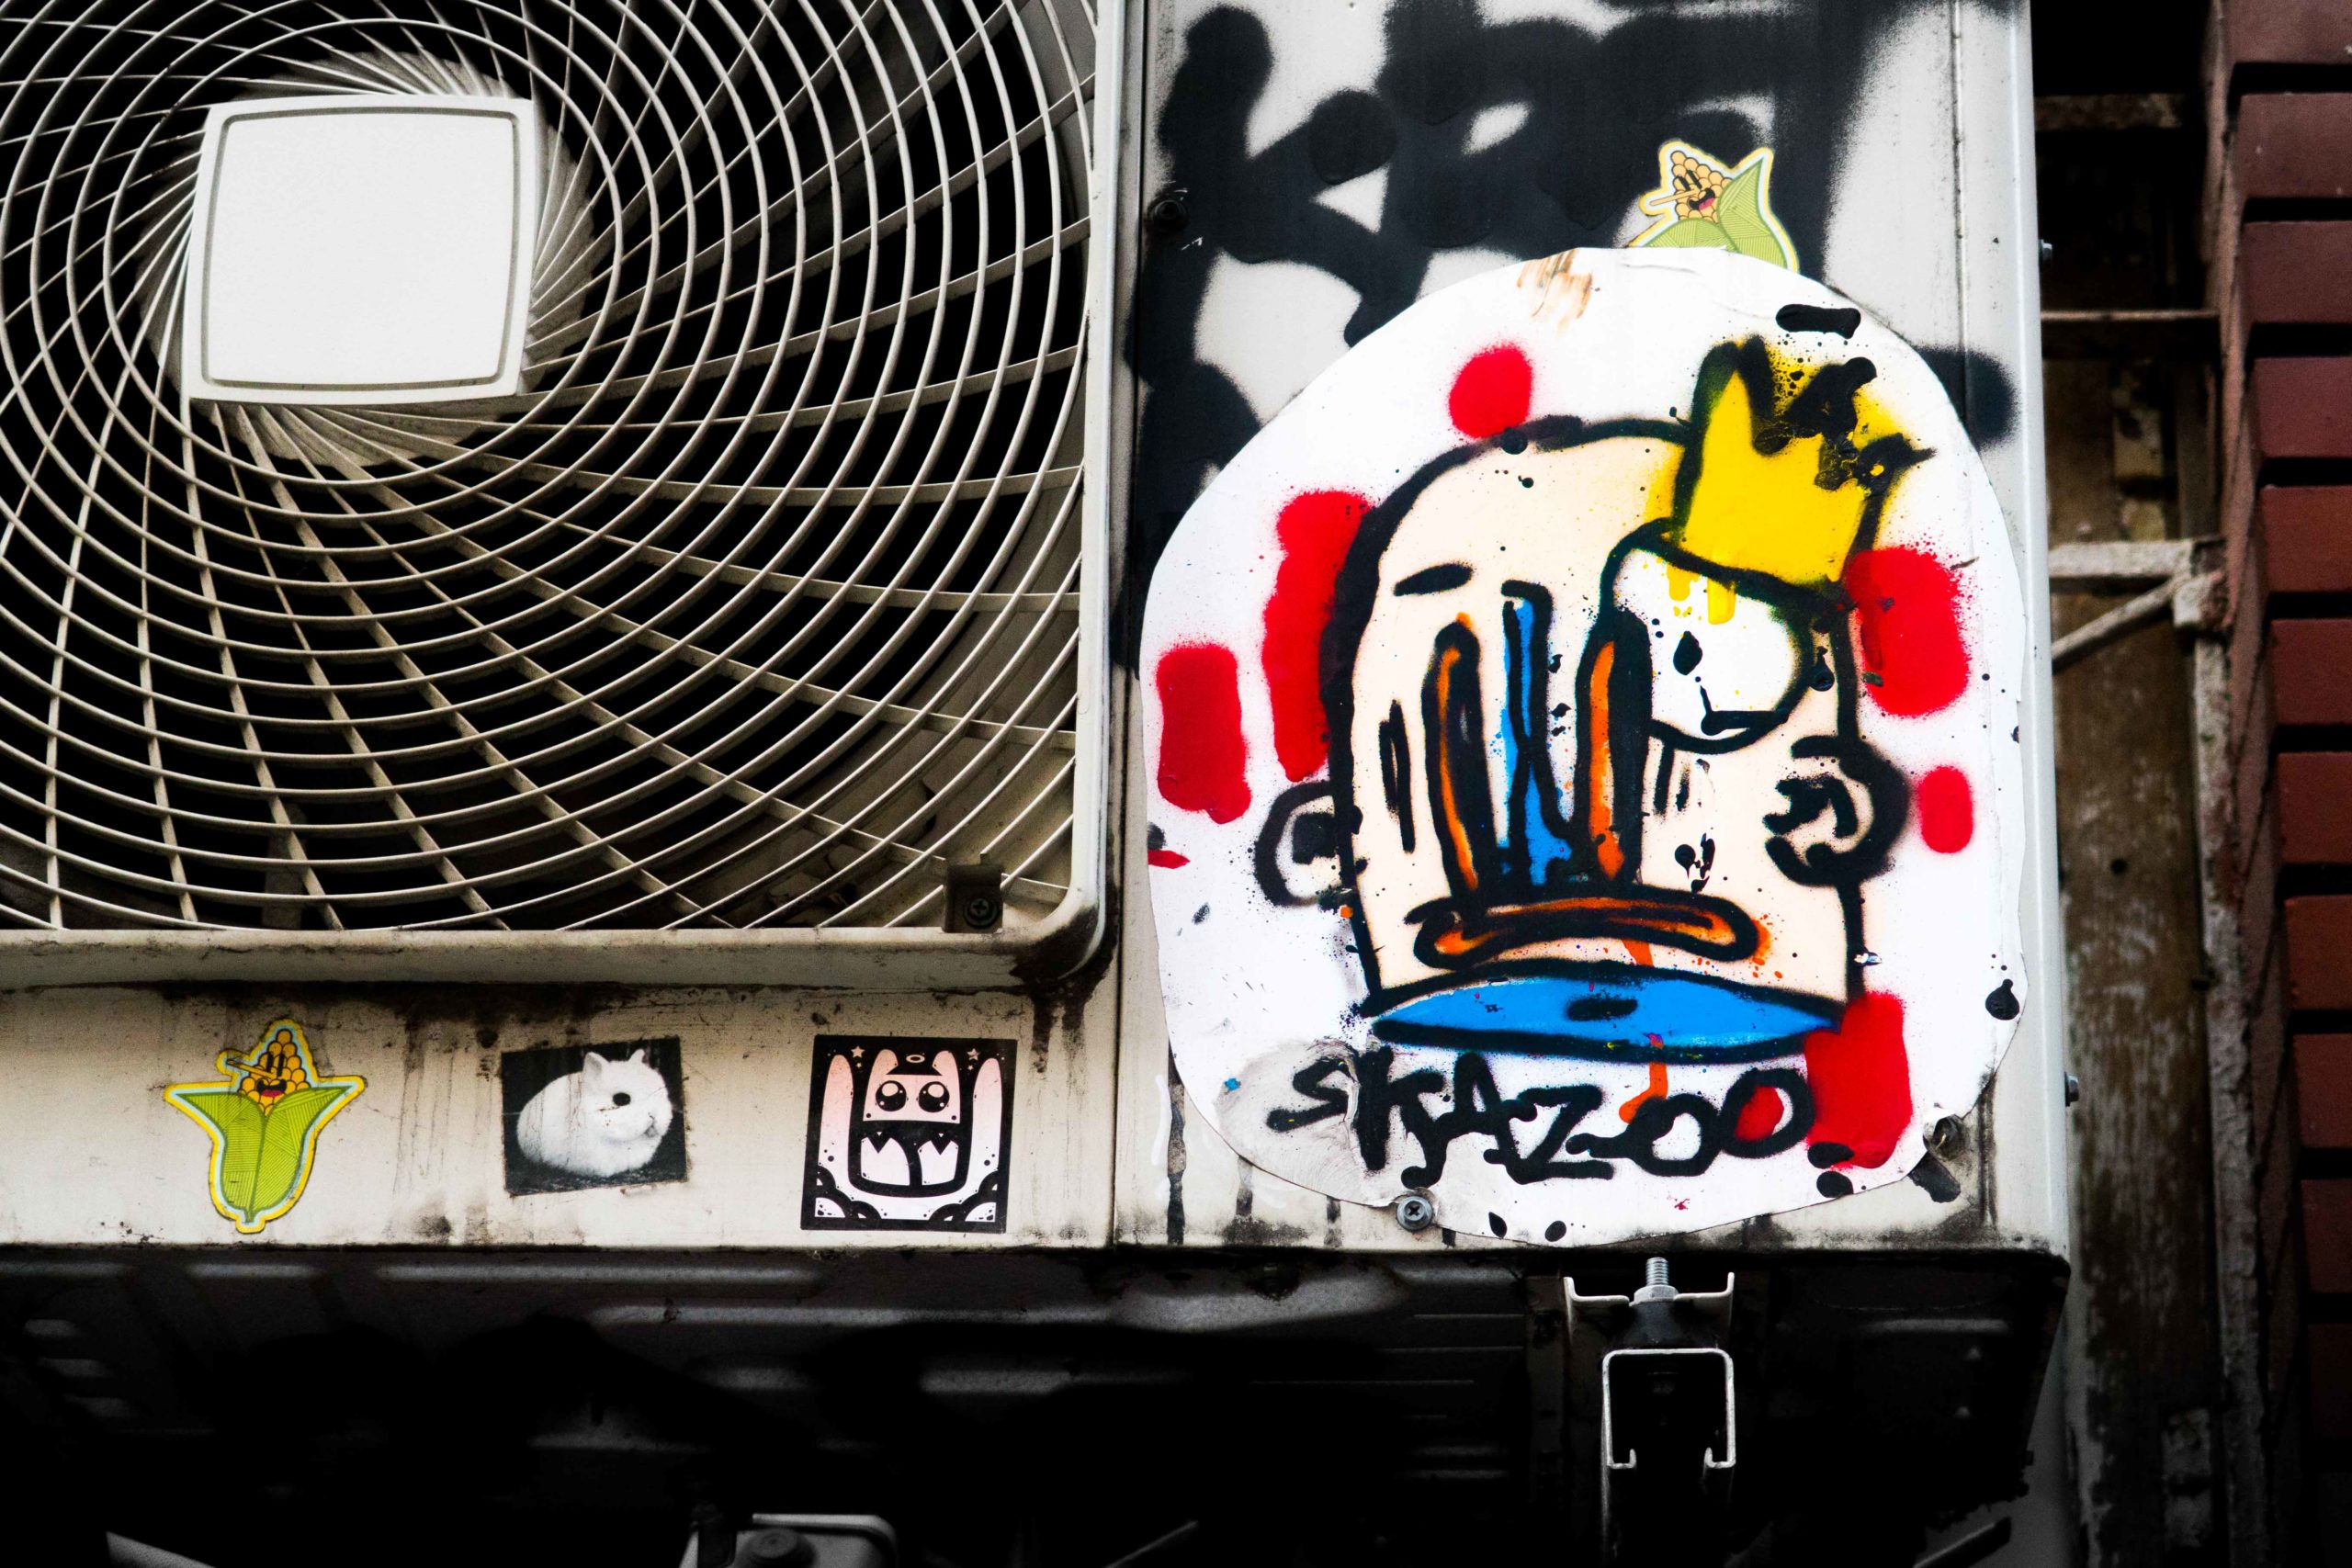 skazoo street art toulouse